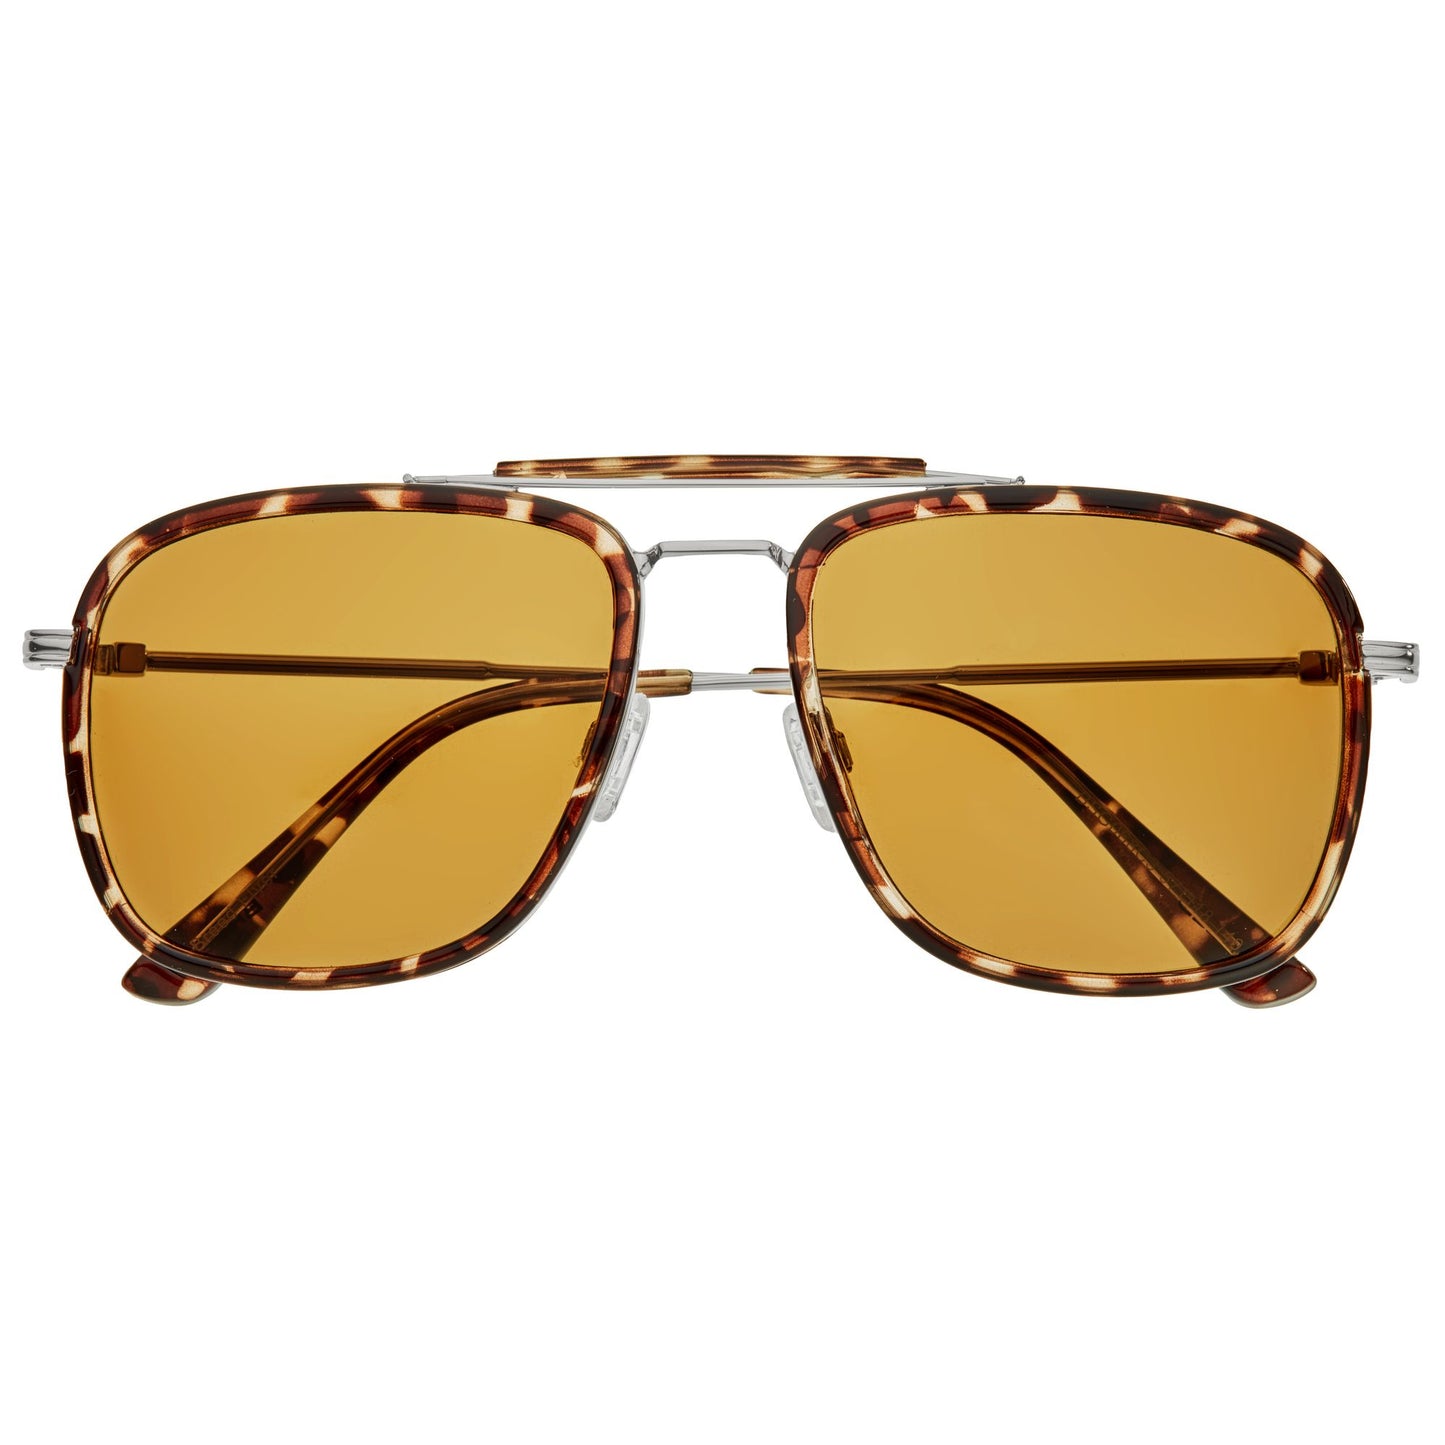 Breed Flyer Polarized Sunglasses - Tortoise/Brown - BSG068C3